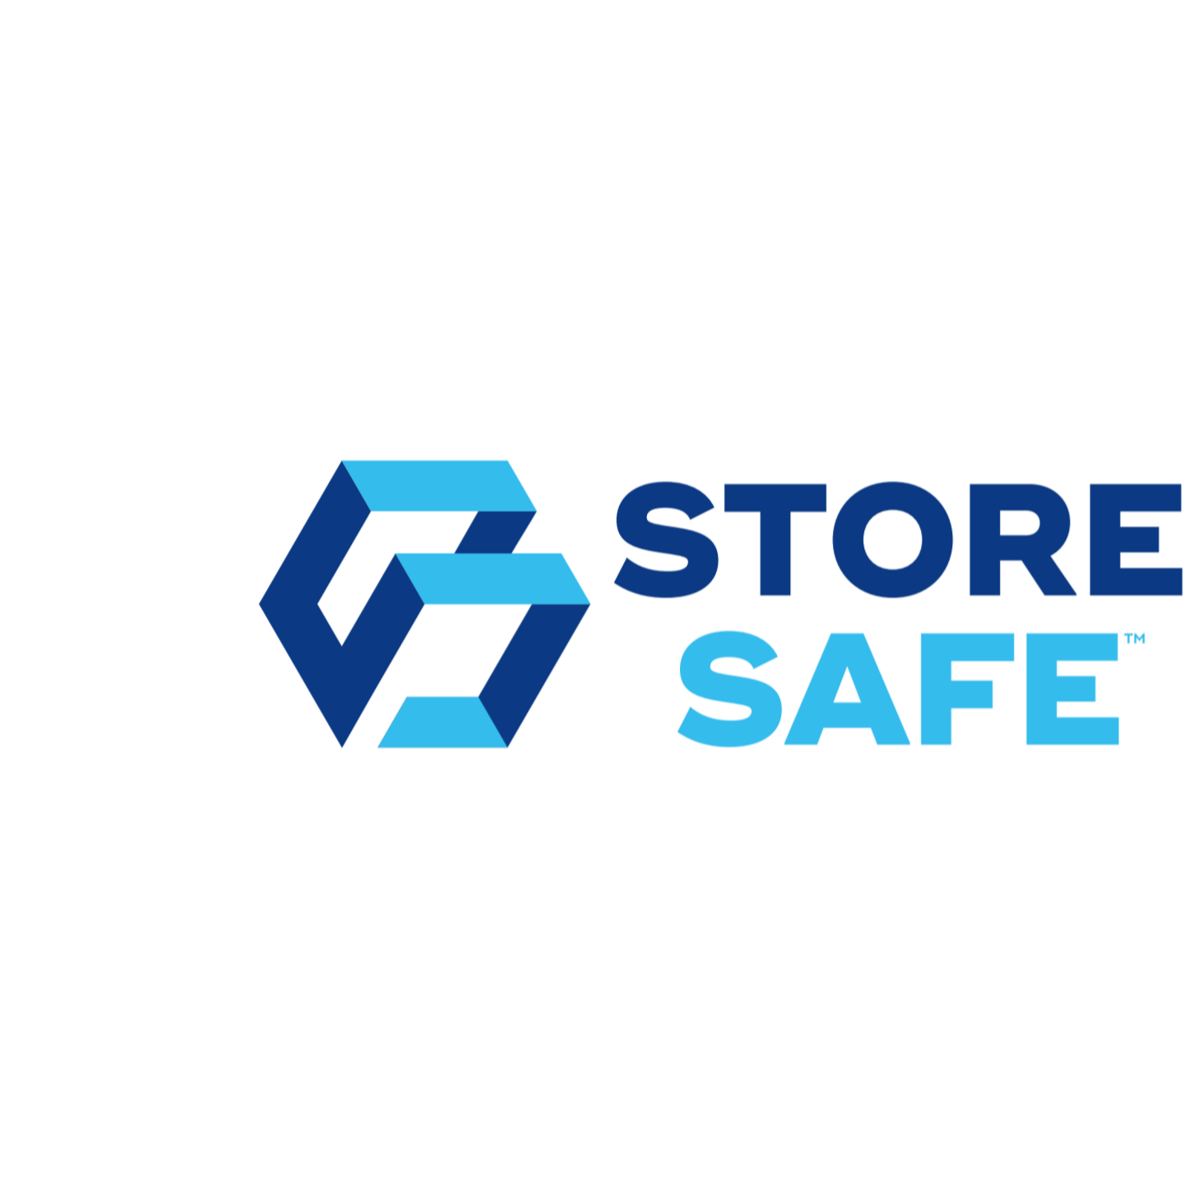 Store safe. Baton rouge logo. Baton rouge логотип.